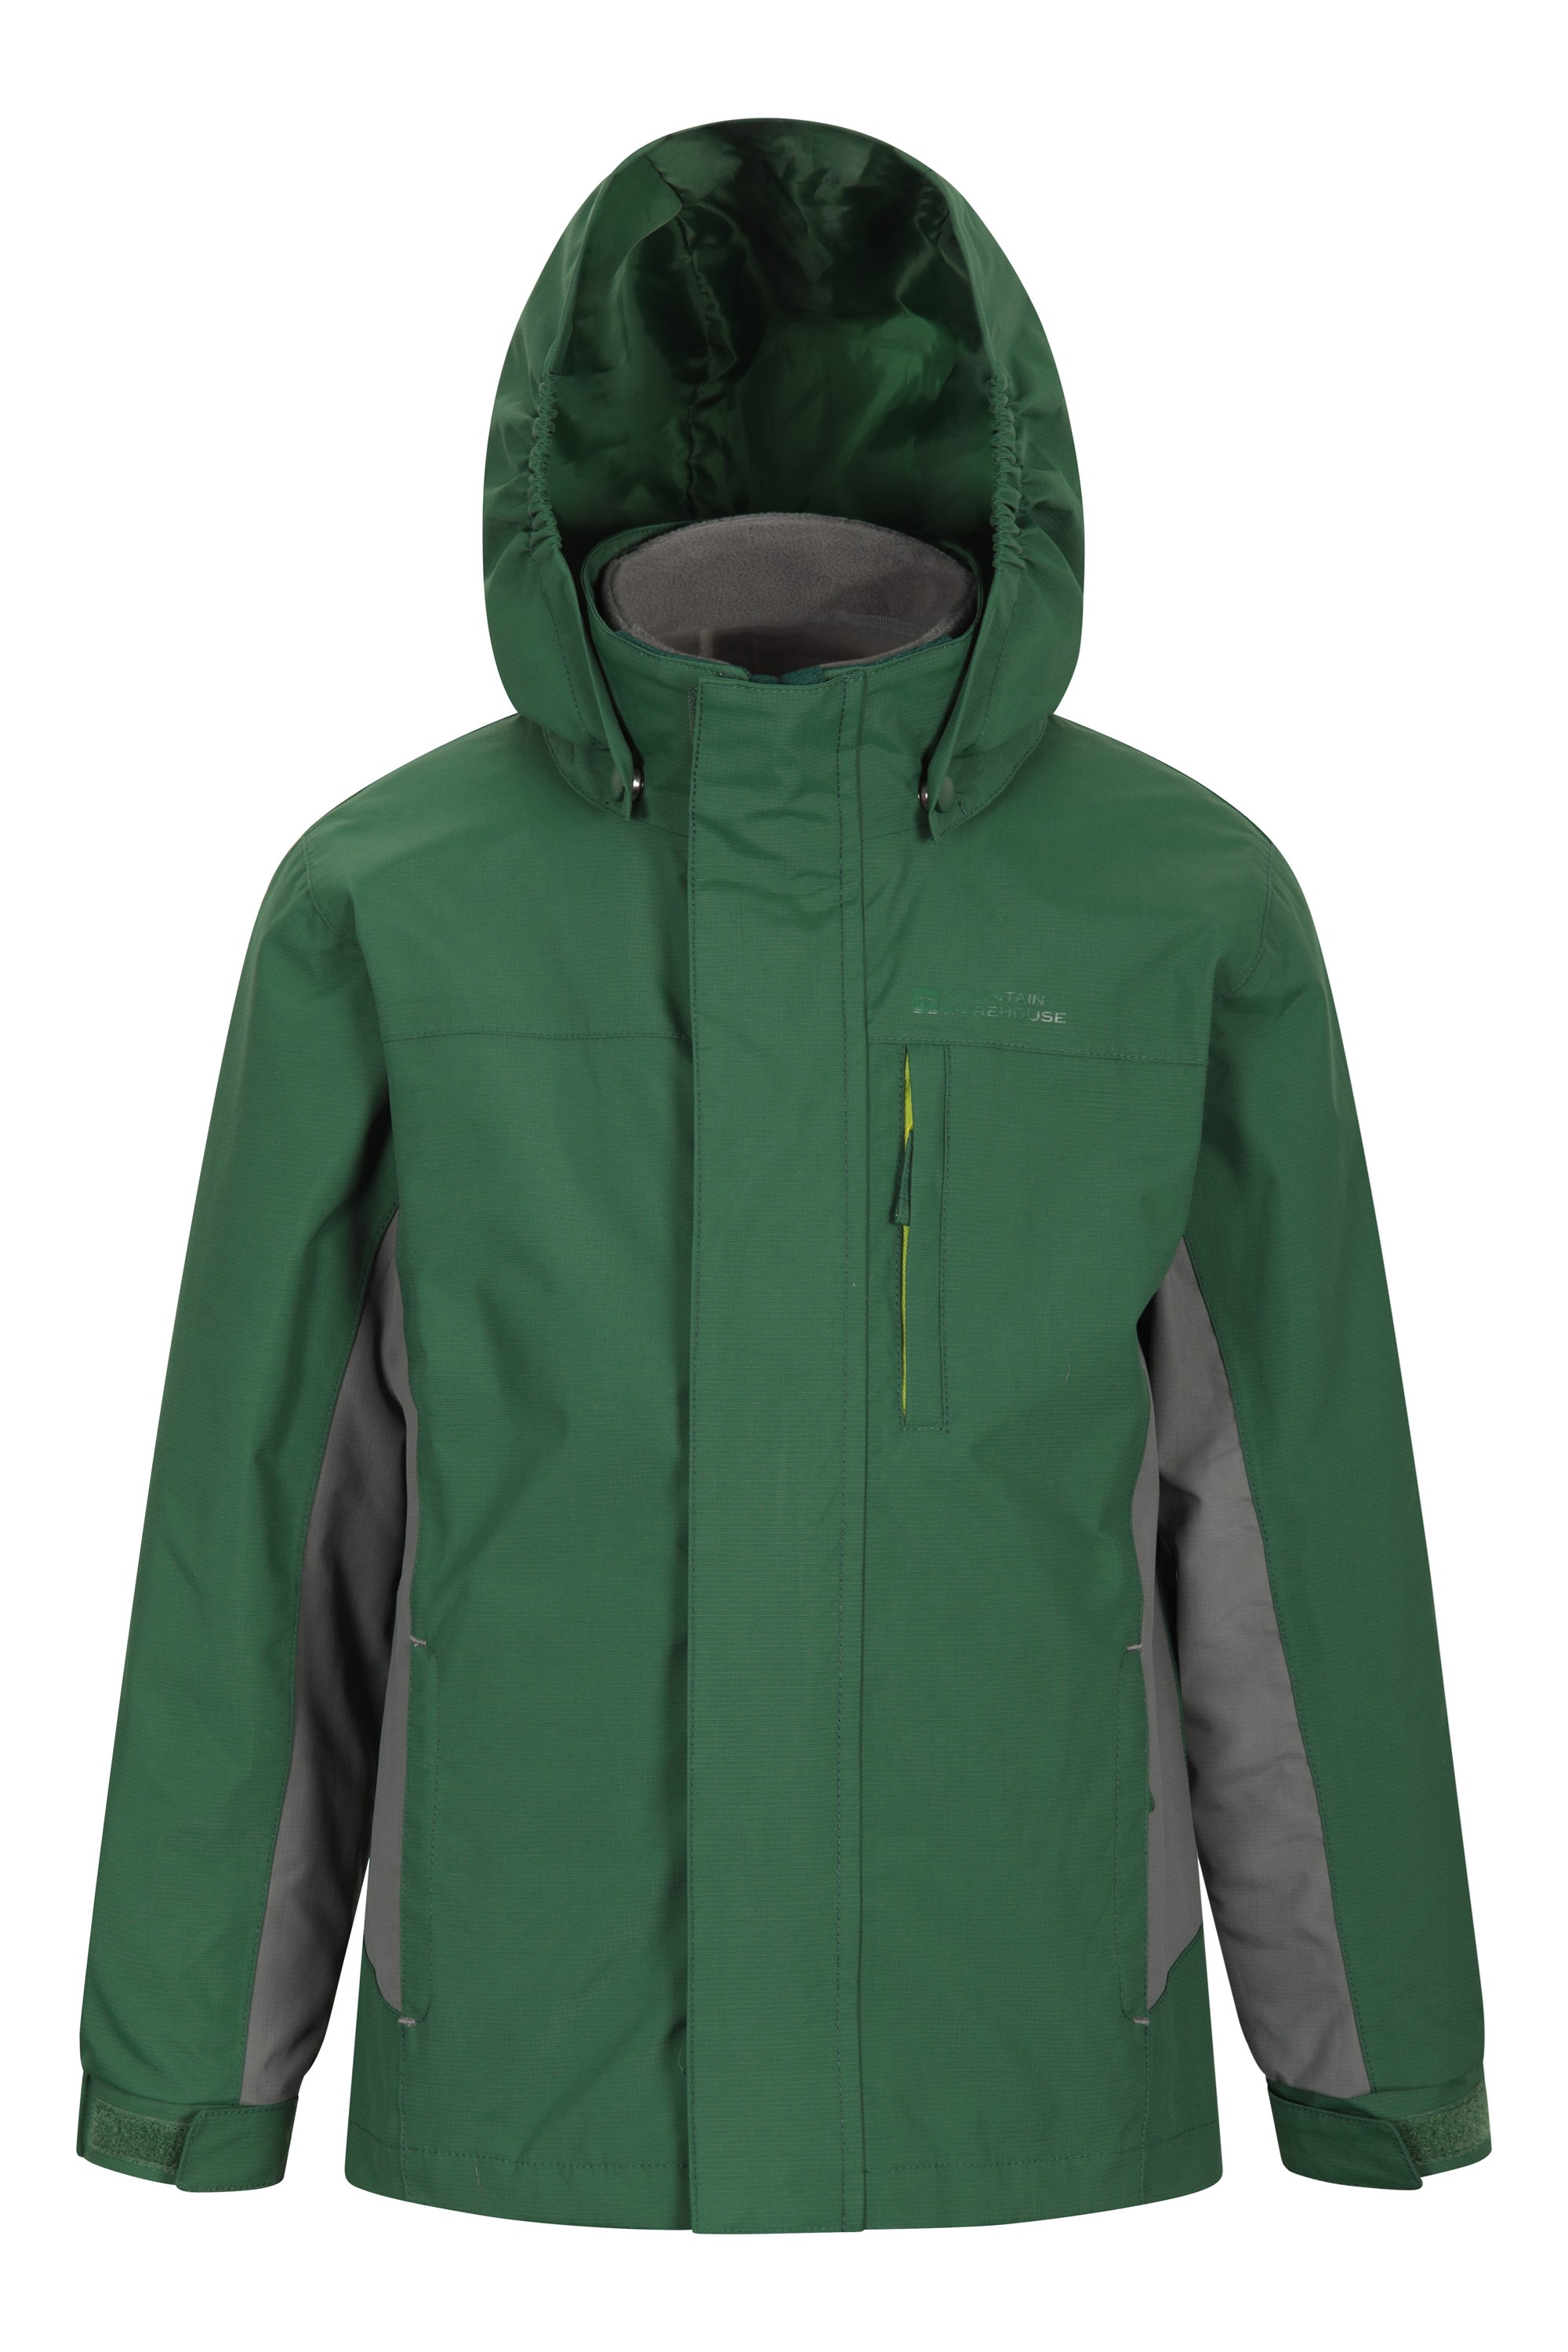 Mountain Warehouse boys mountain warehouse 3 in 1 Waterproof jacket size 7-8 green 